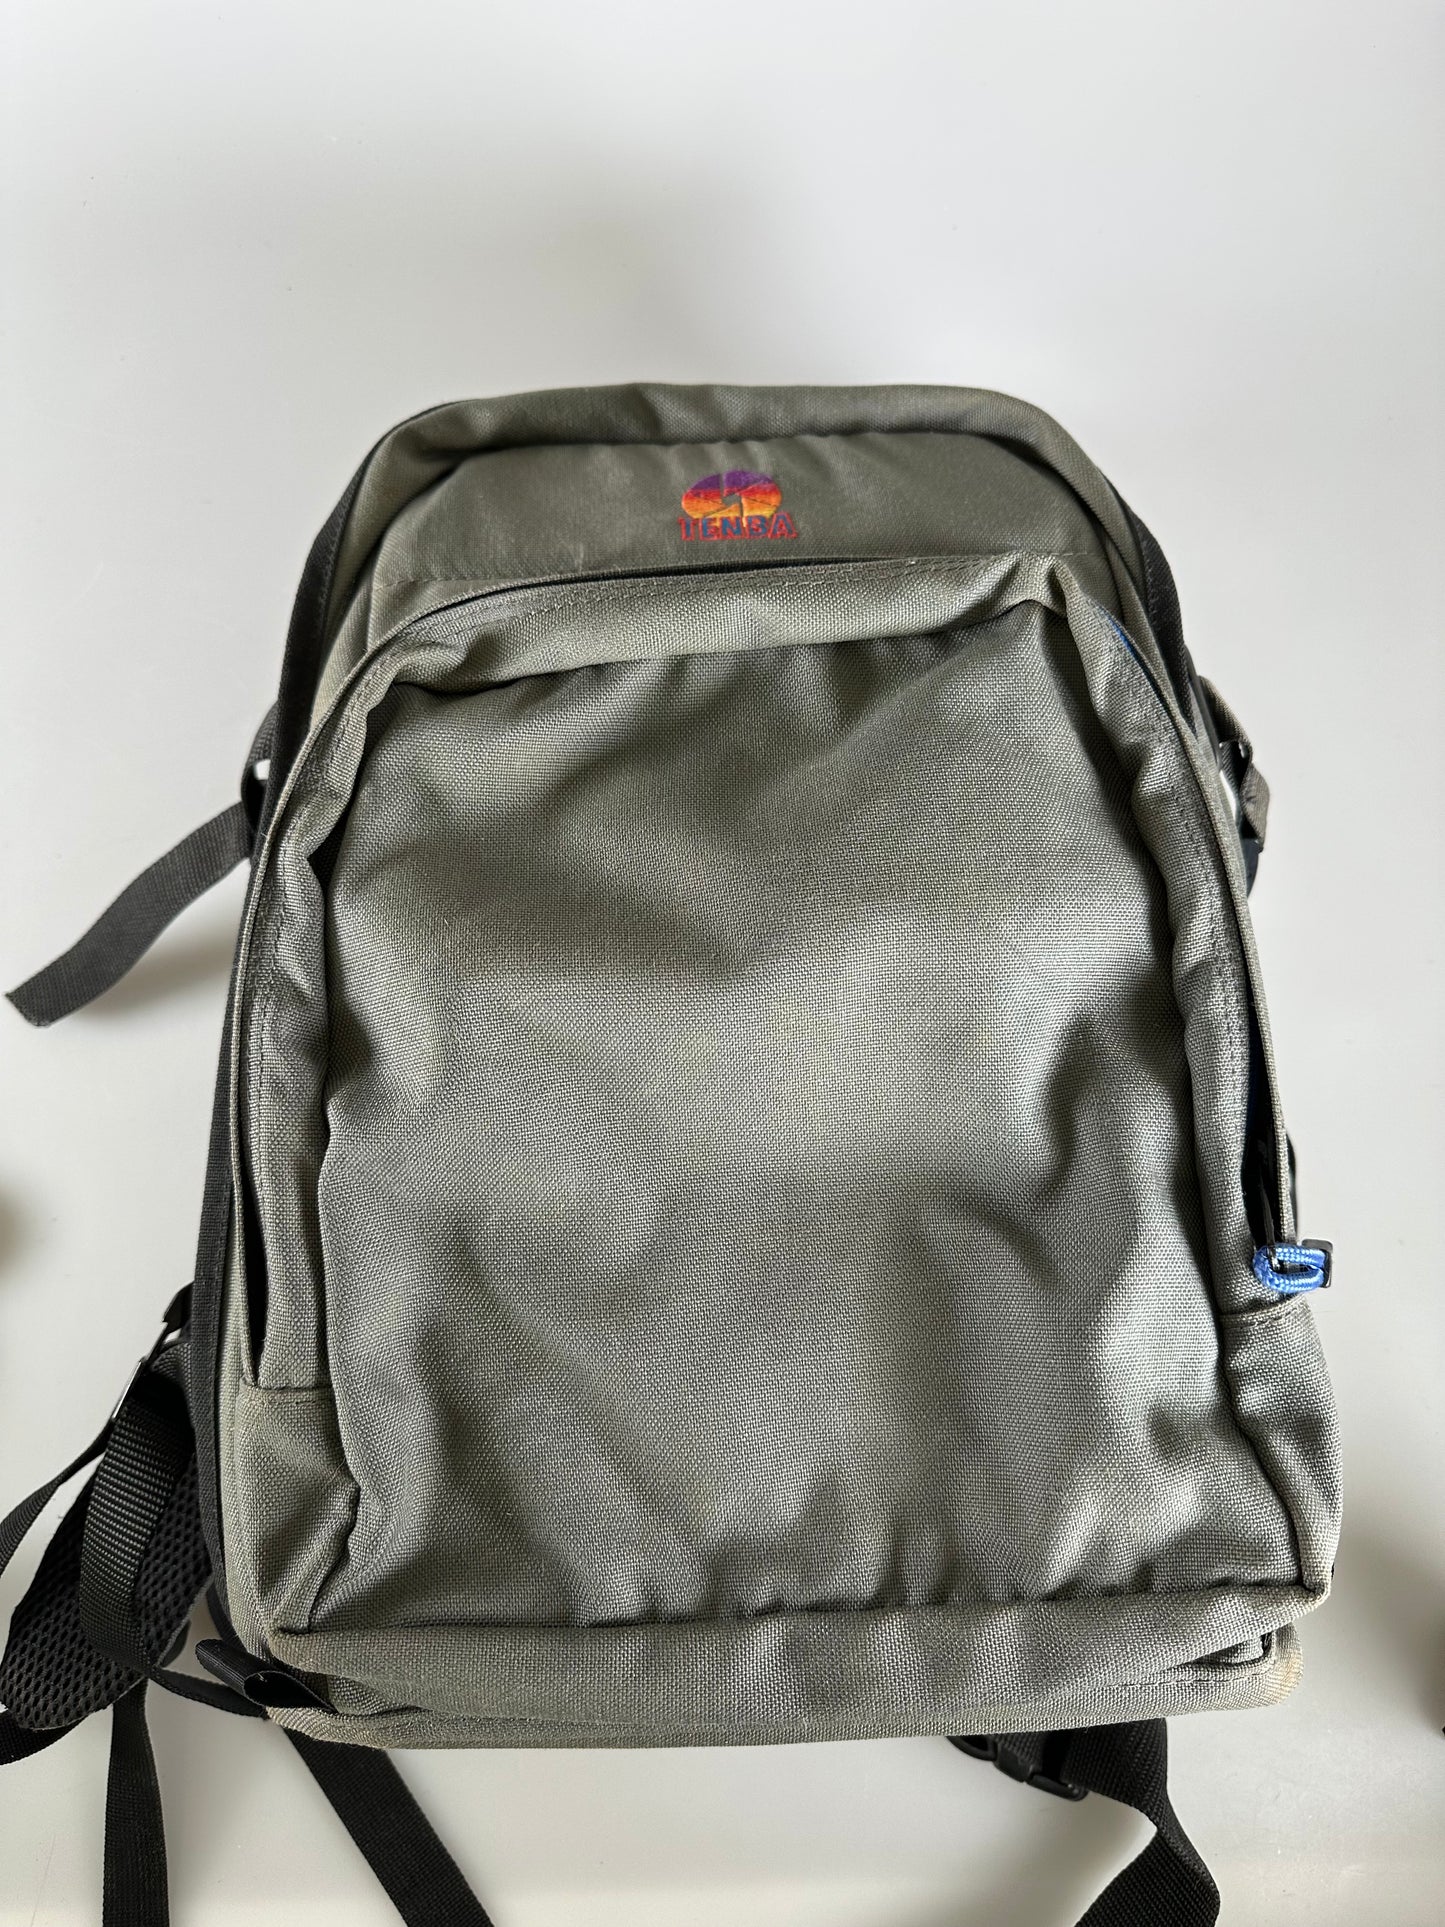 Vintage Grey Gray TENBA canvas Pro CAMERA Equipment backpack BAG